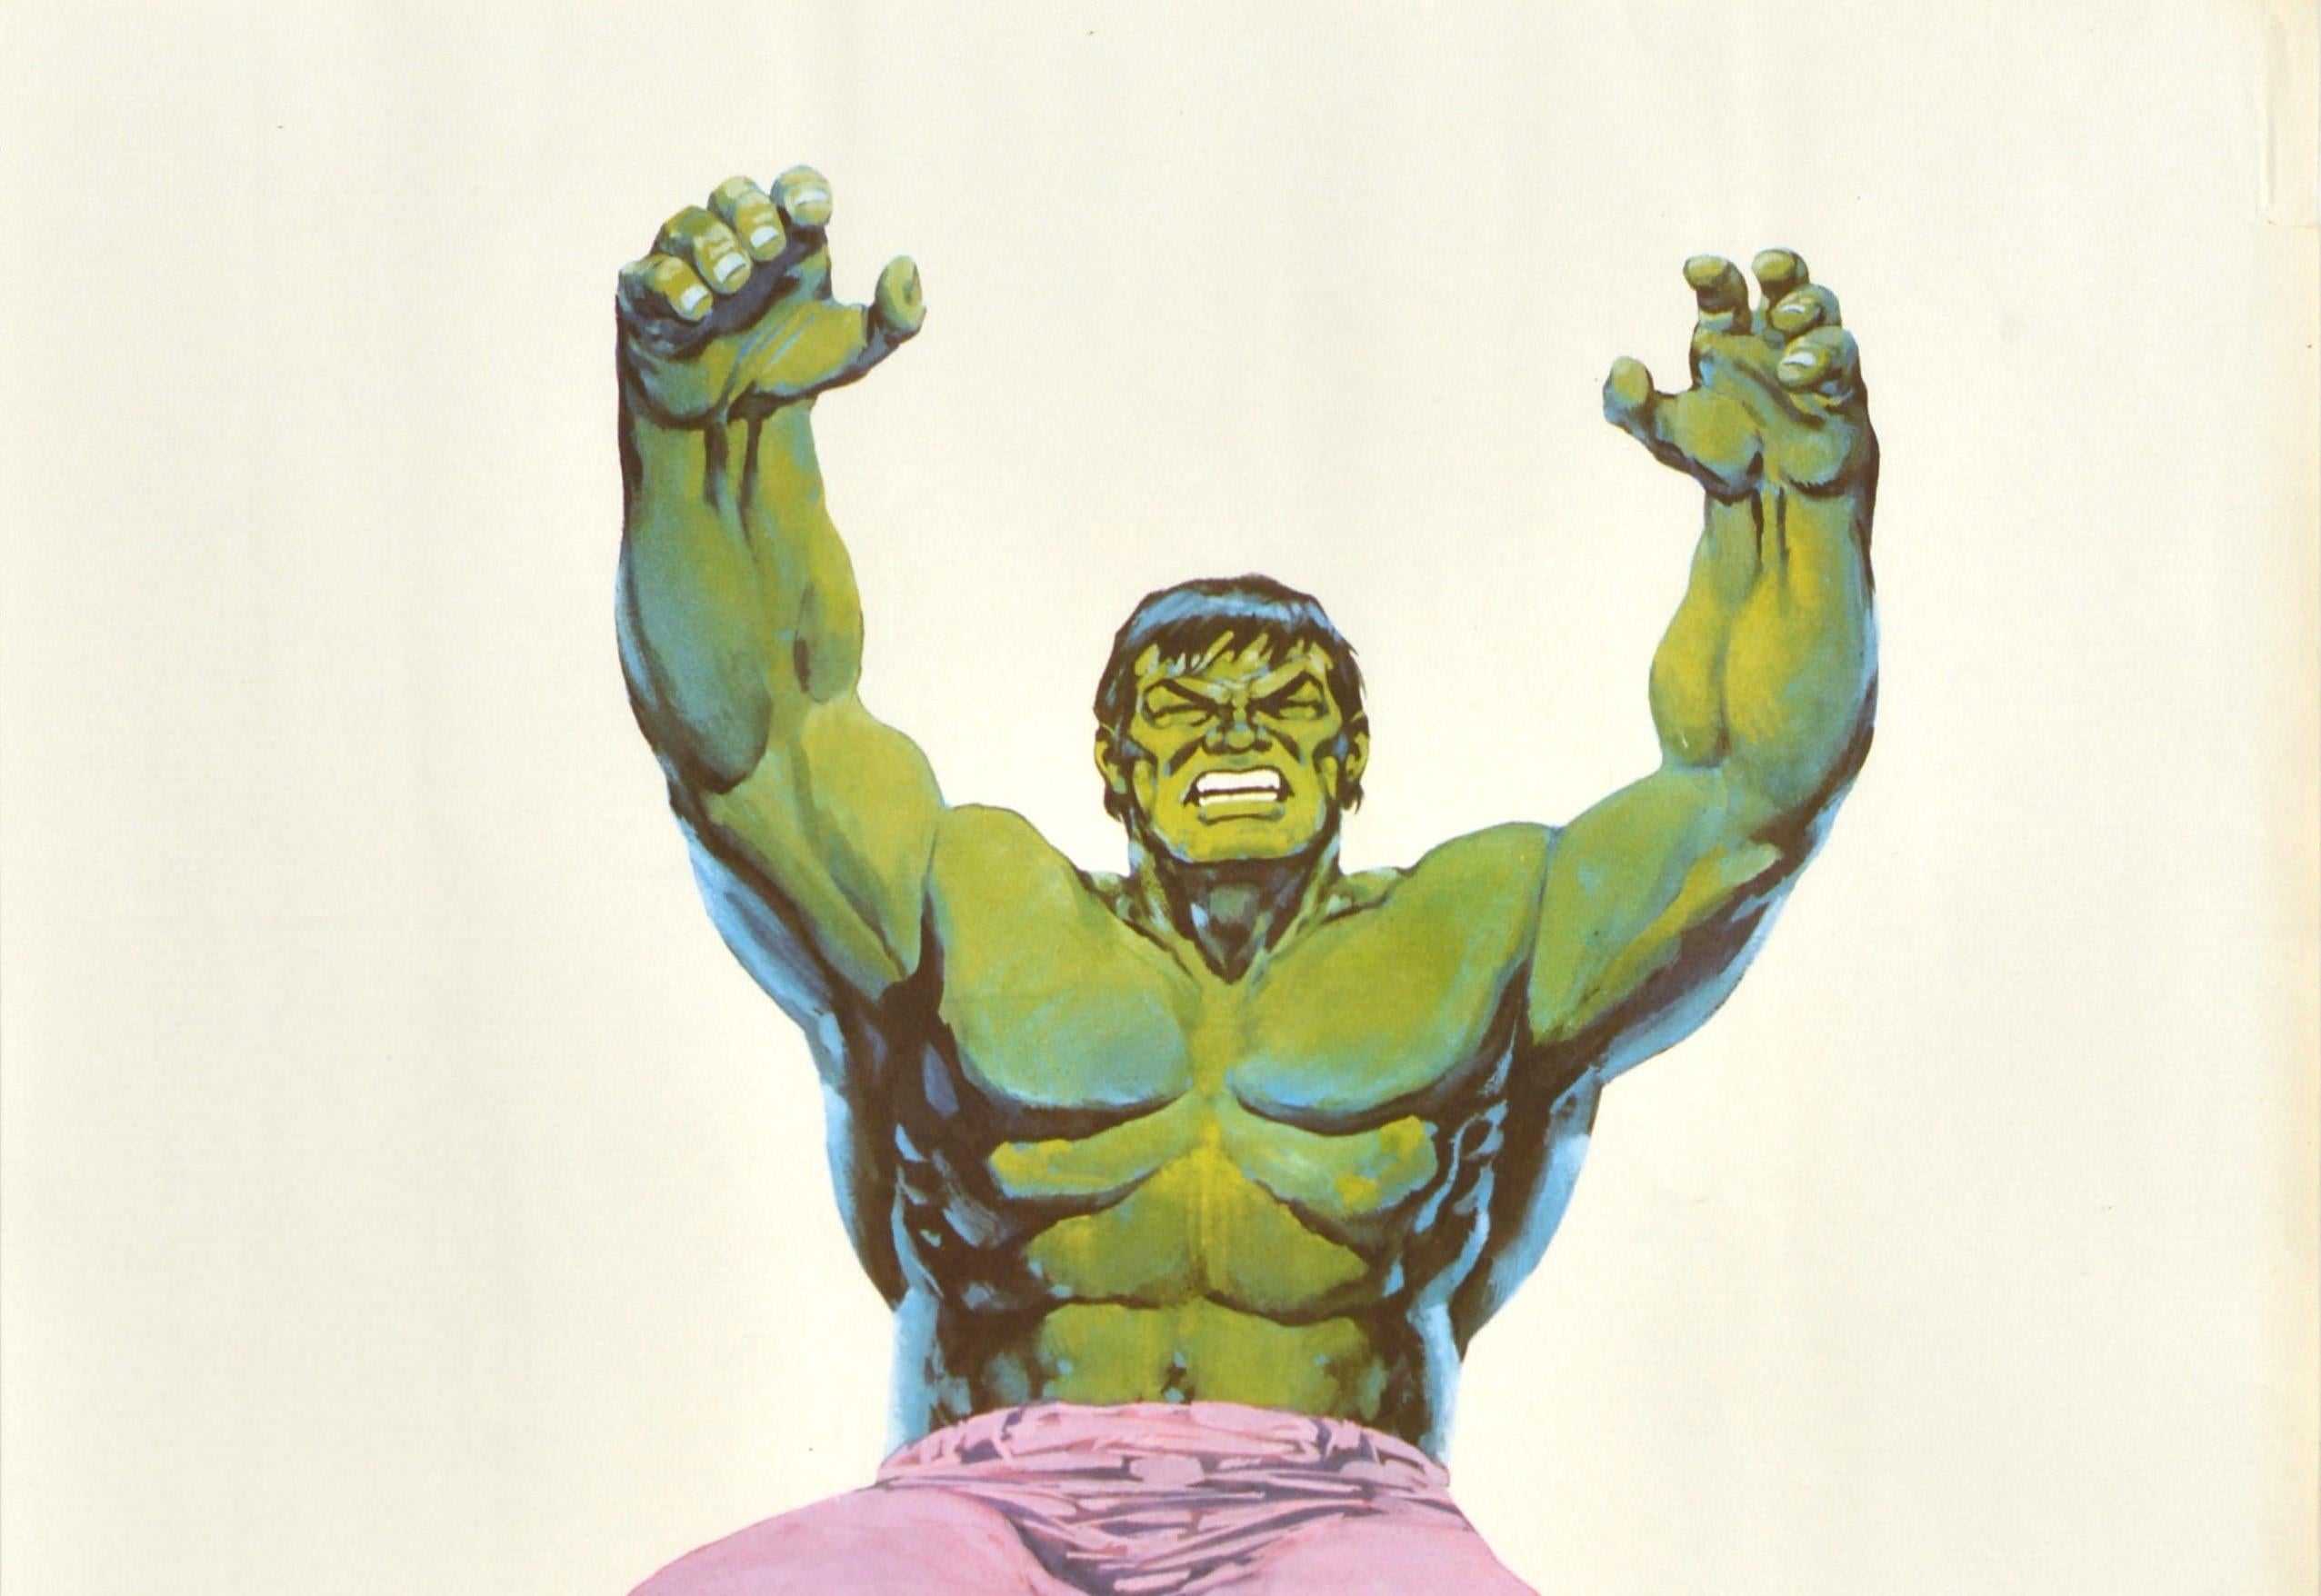 Original Vintage Marvel Film Poster The Hulk Animated Comics Superhero Movie Art - Print by Lopez Espi